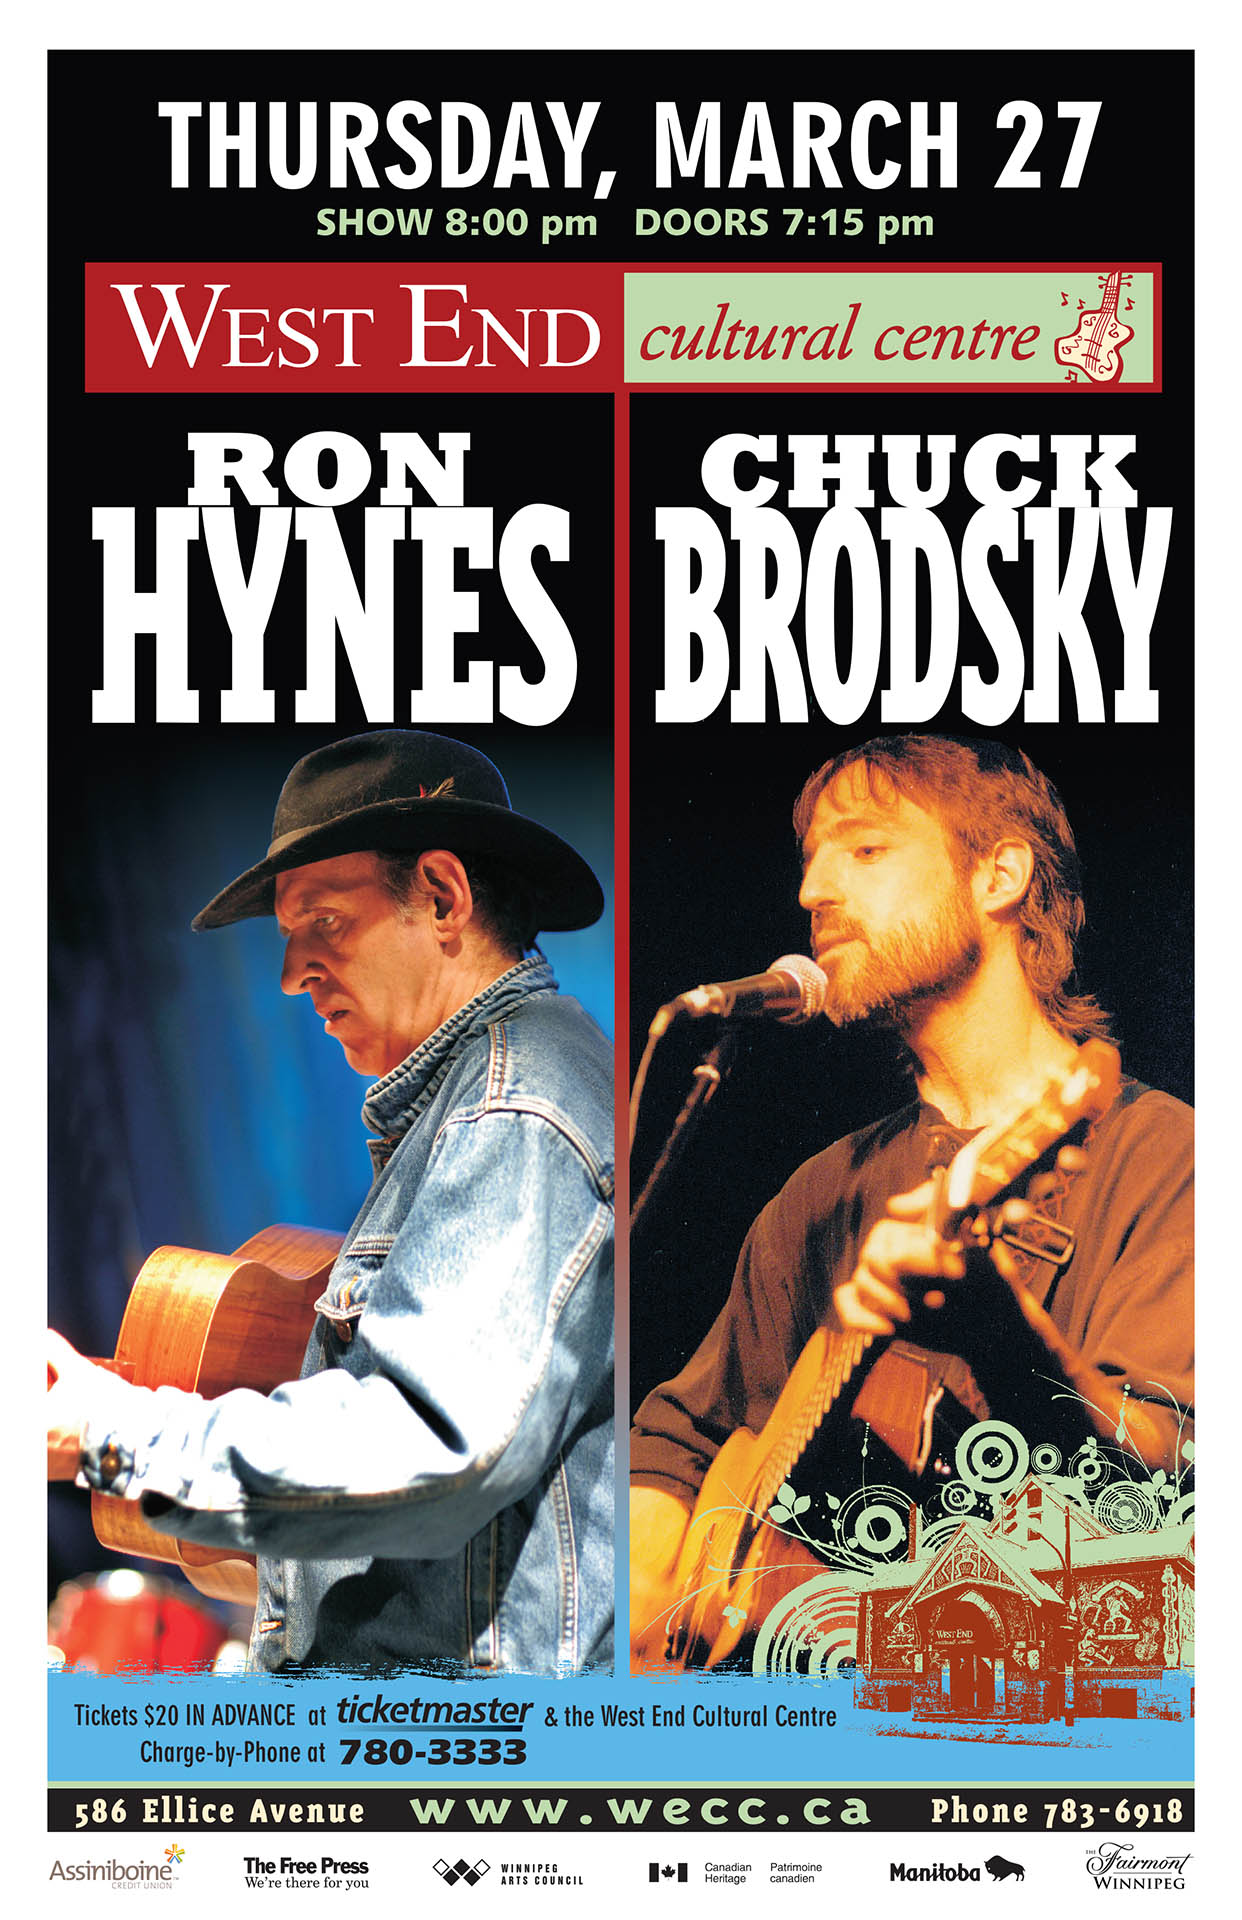 RON HYNES & CHUCK BRODSKY – 2008